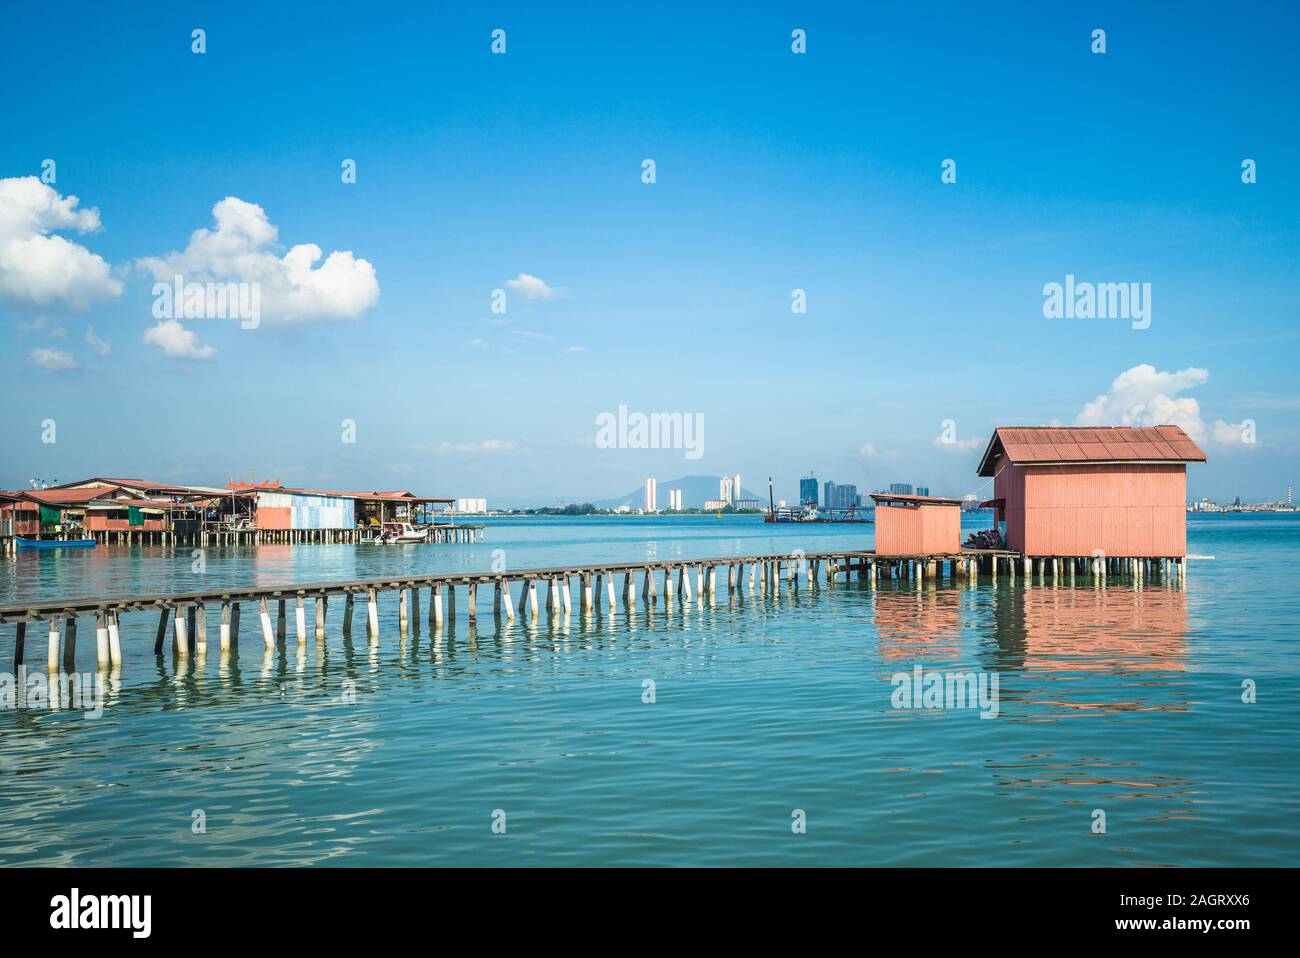 tan jetty, one of clan jetties at penang, malaysia Stock Photo